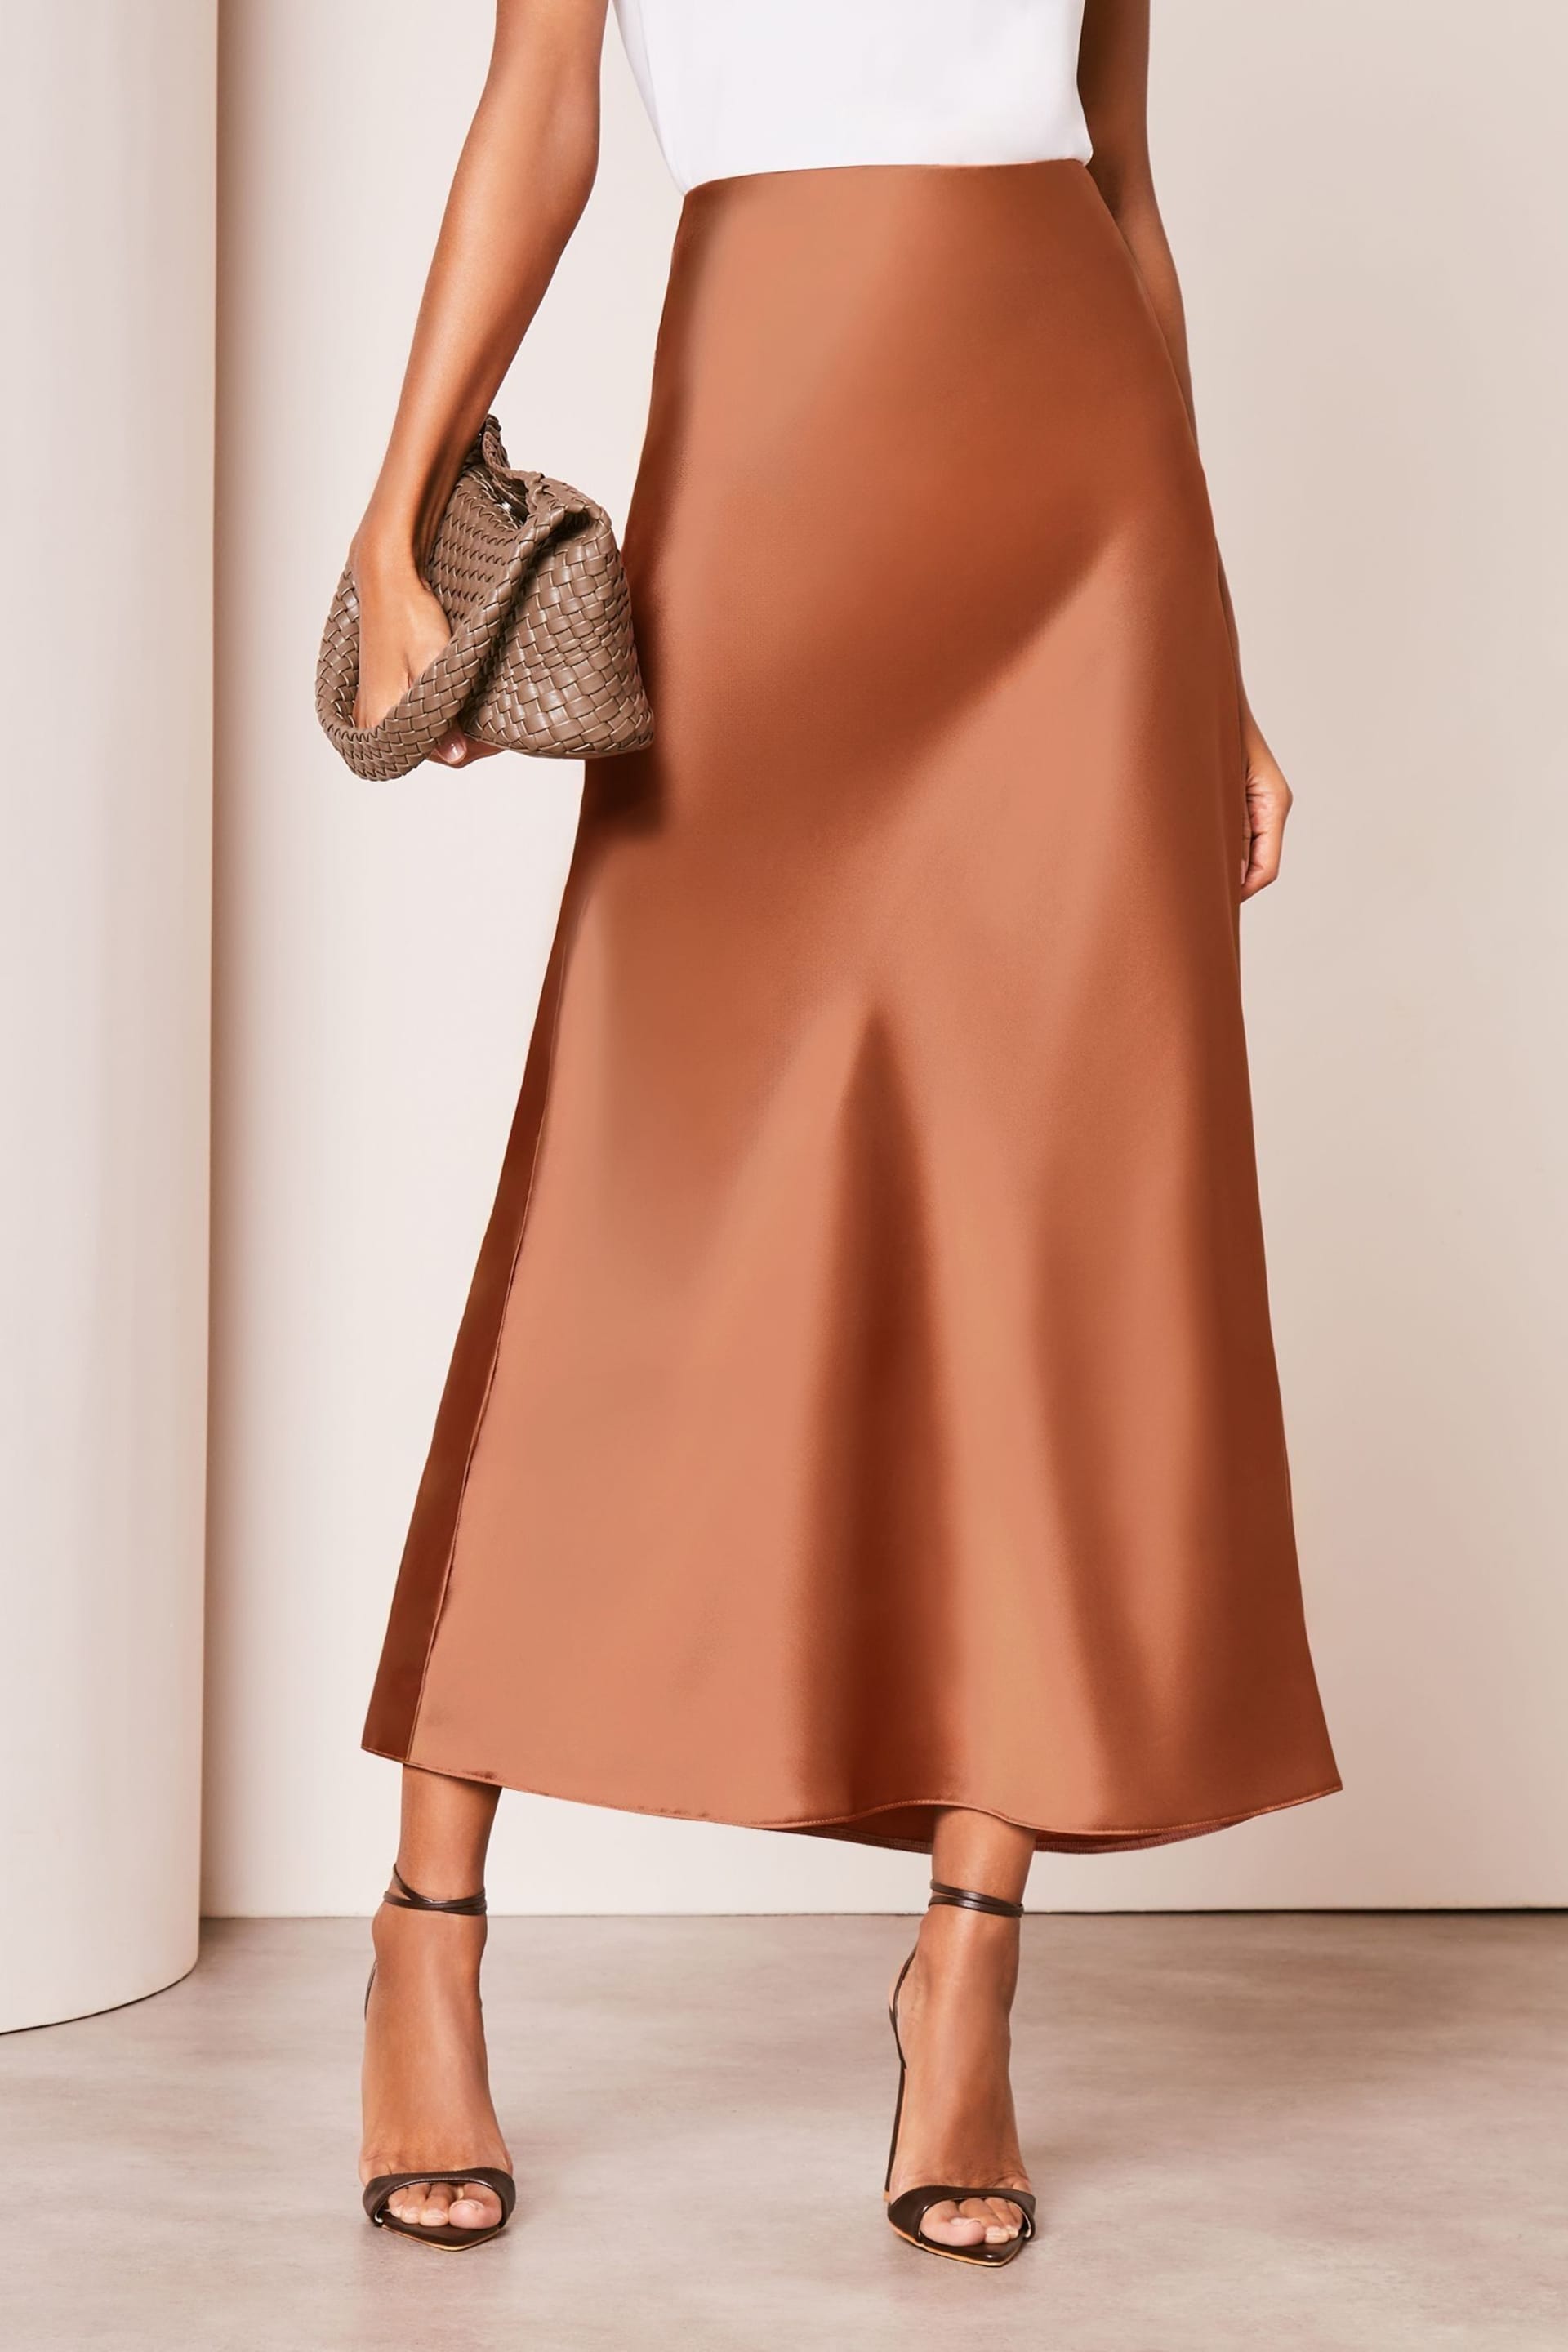 Lipsy Brown Satin Bias Cut Midi Skirt - Image 1 of 4